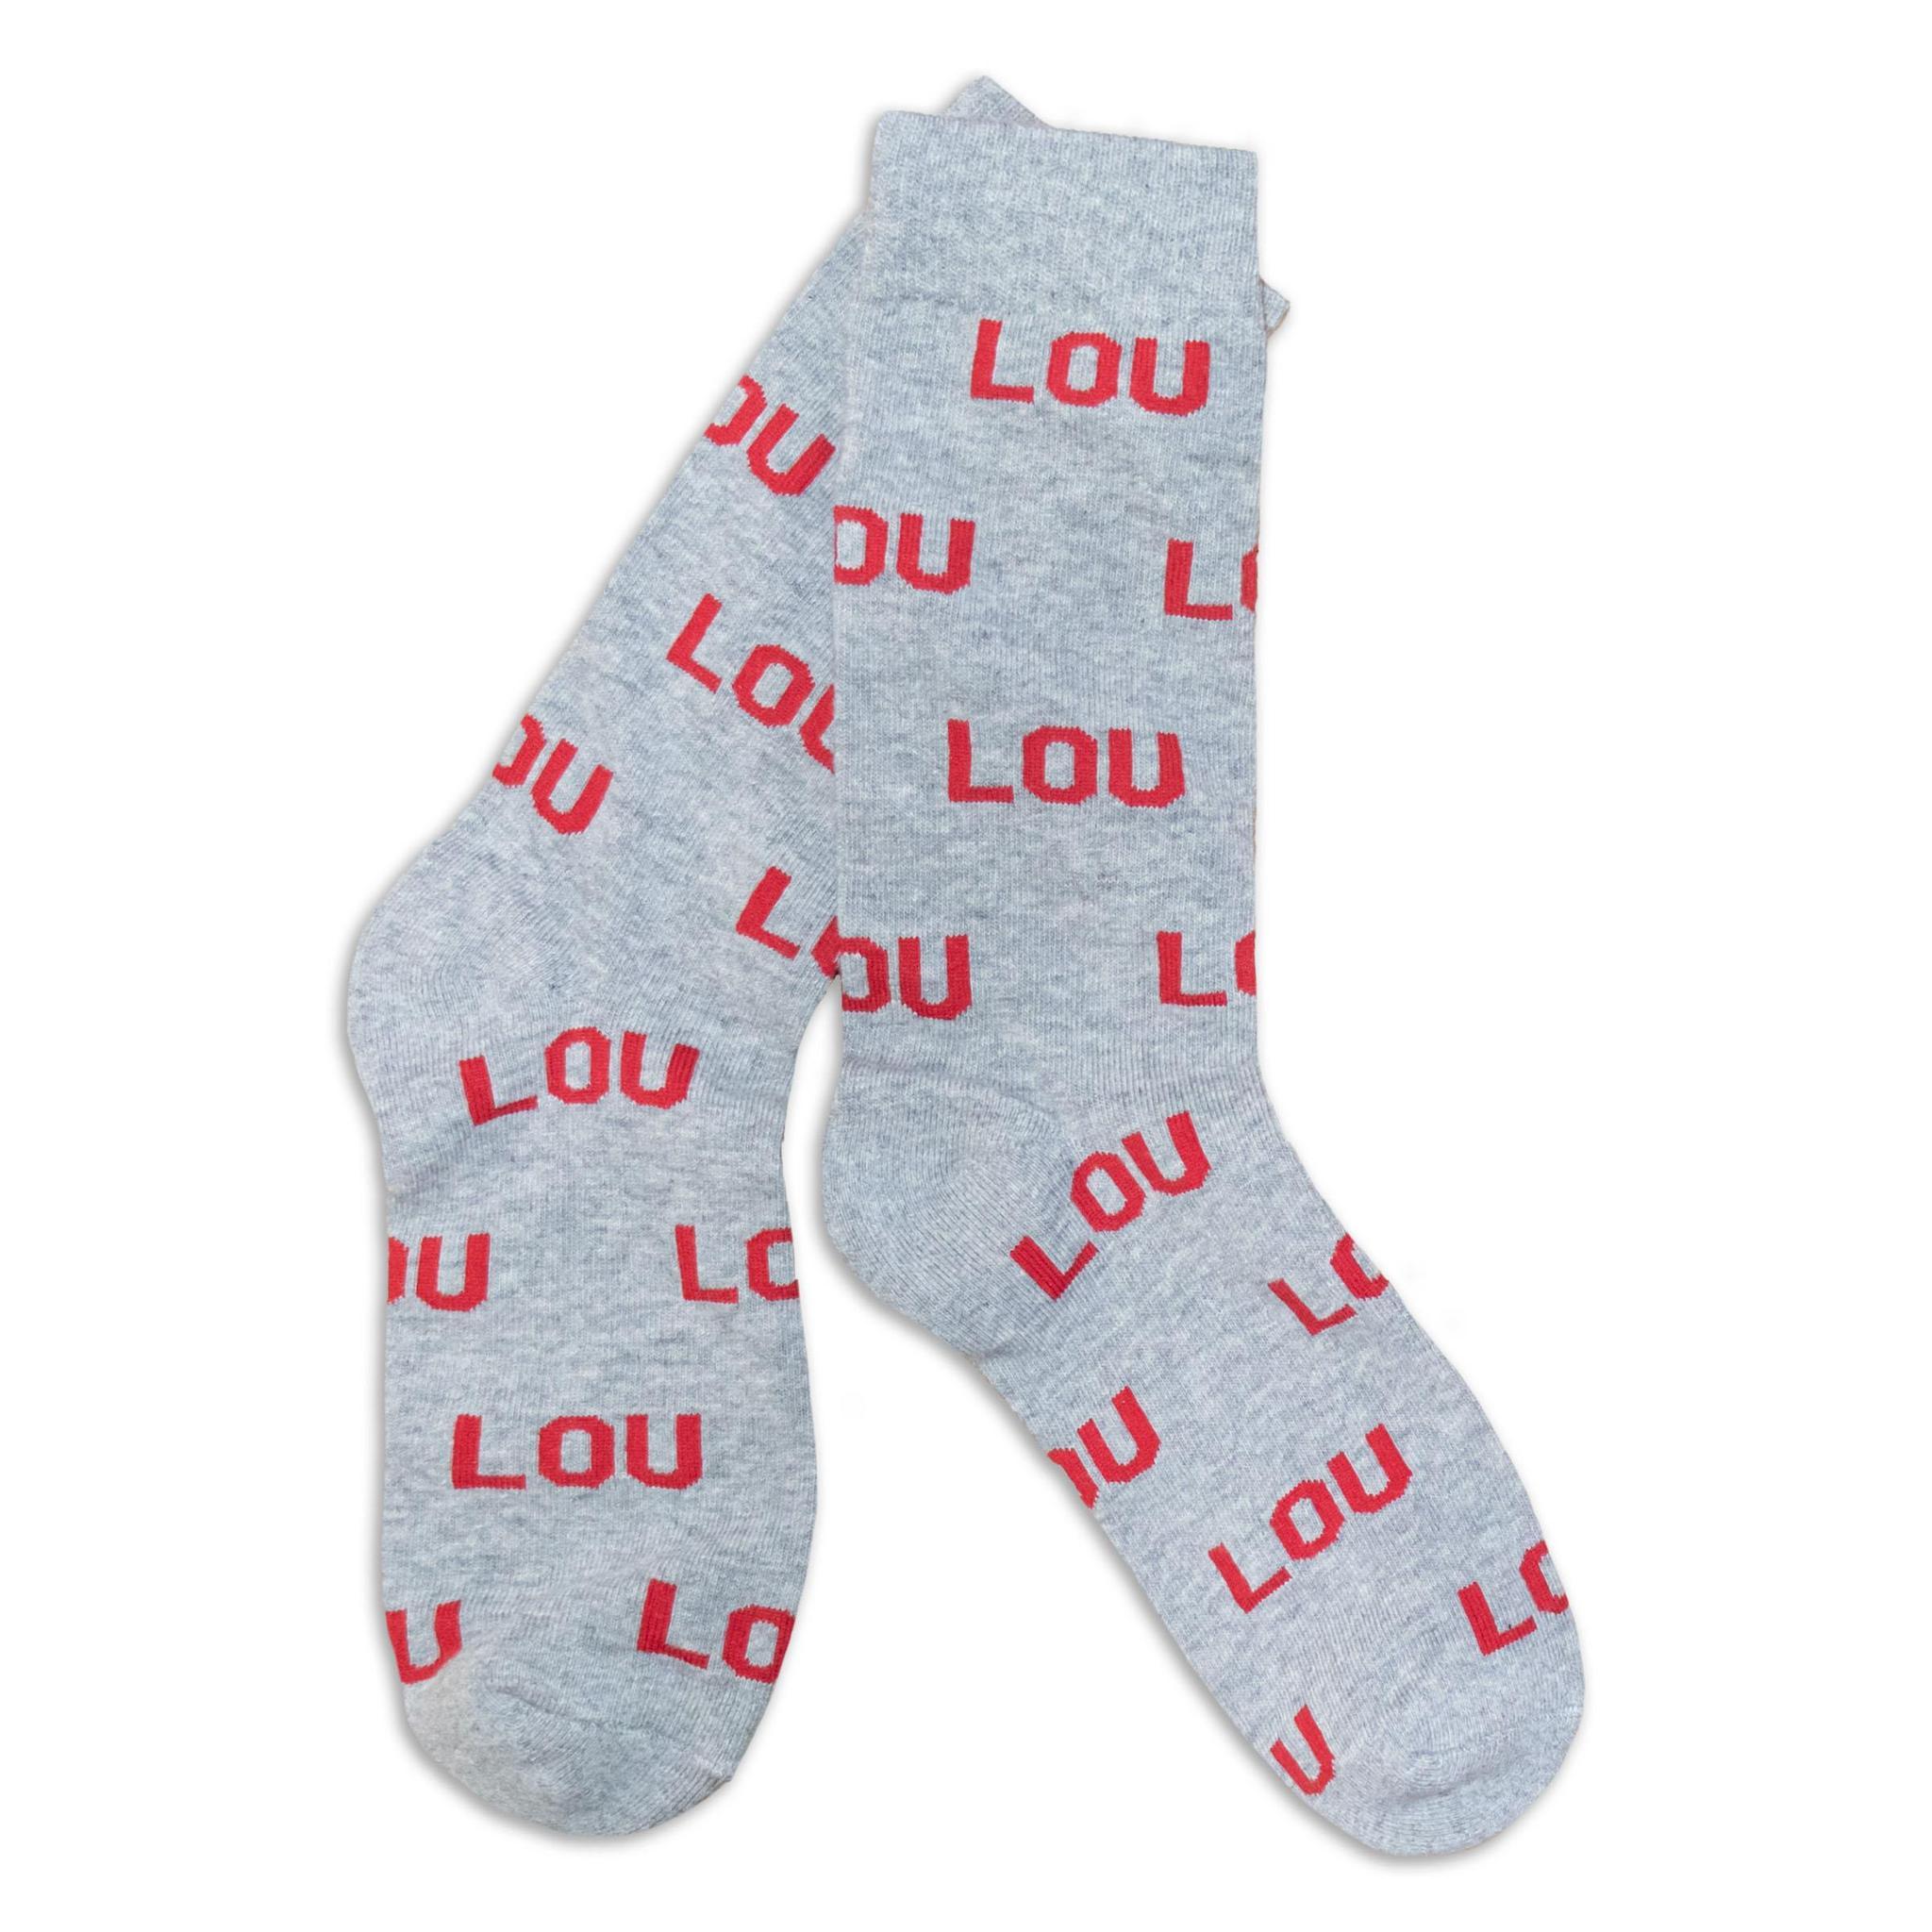 New LOU Socks (Grey and Red)-socks-Southern Socks